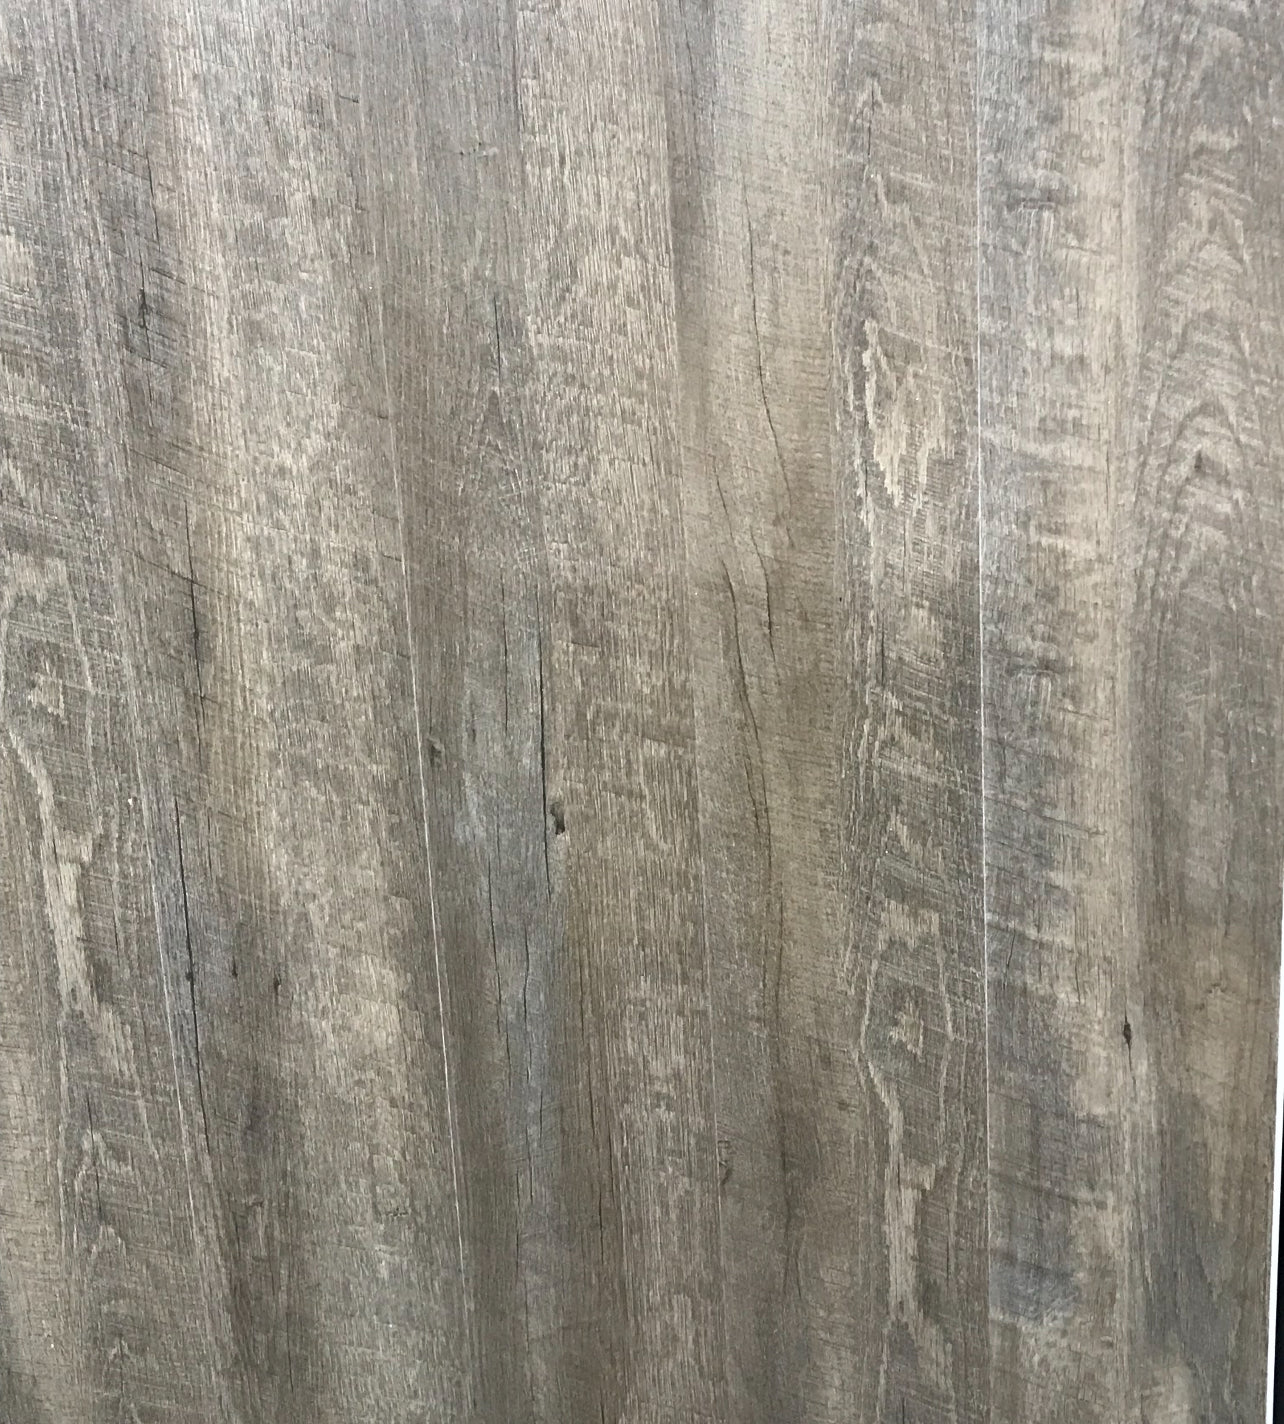 Closeout 12 mil Luxury Vinyl Plank Flooring - Barn Oak $1.59/sqft